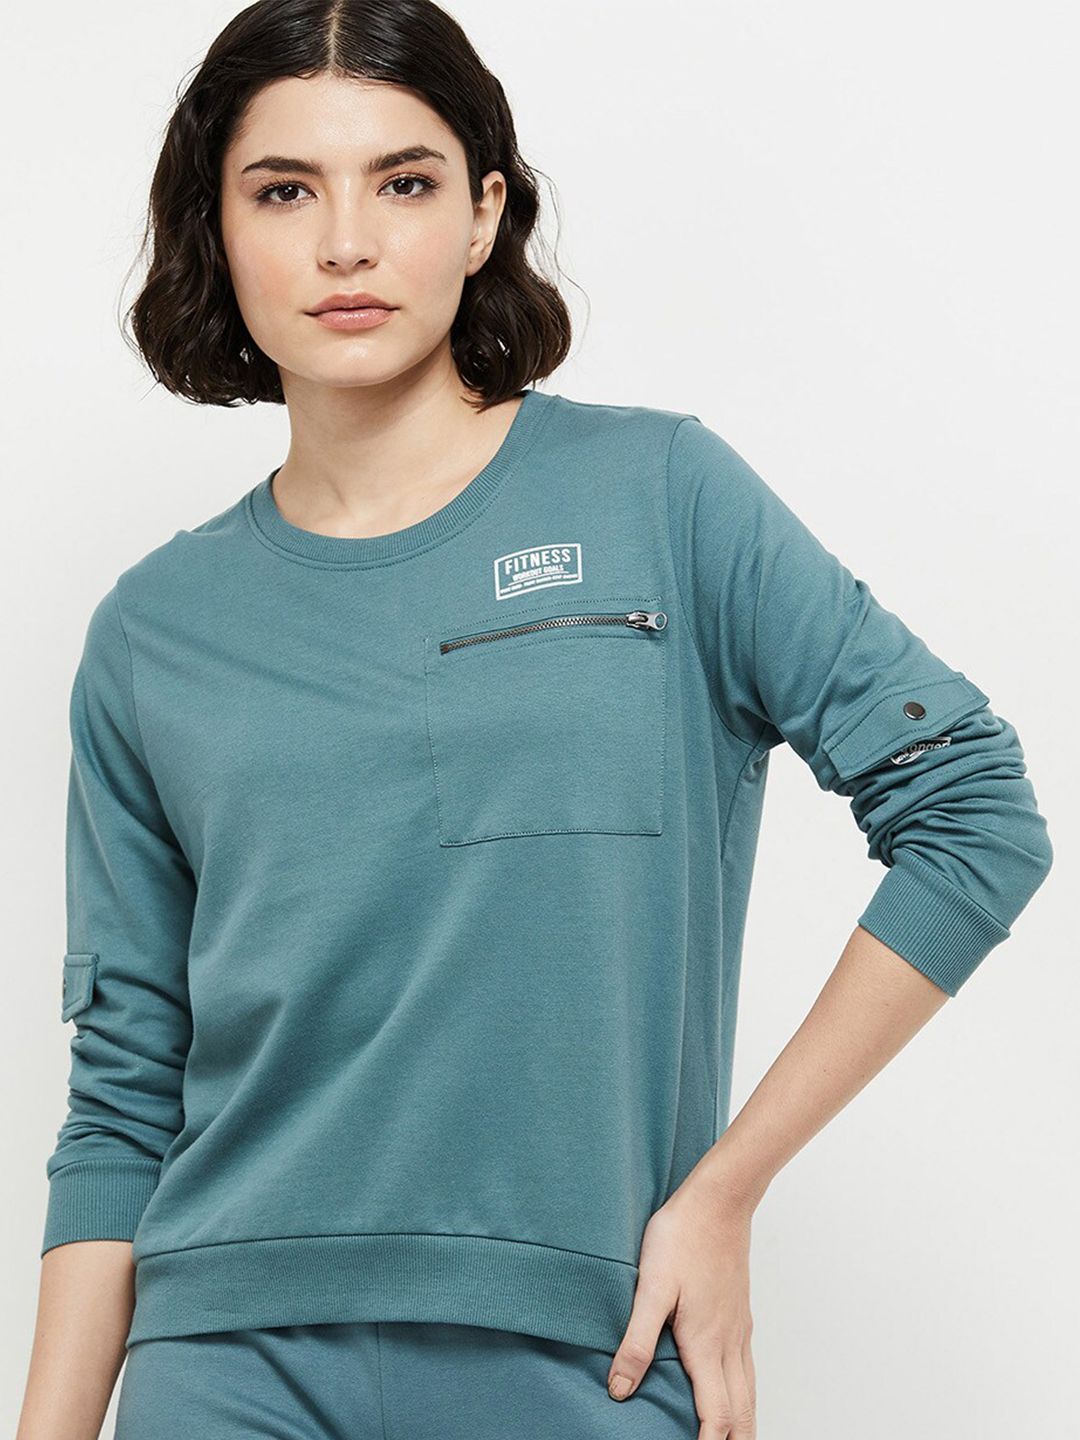 max Women Green Sweatshirt Price in India